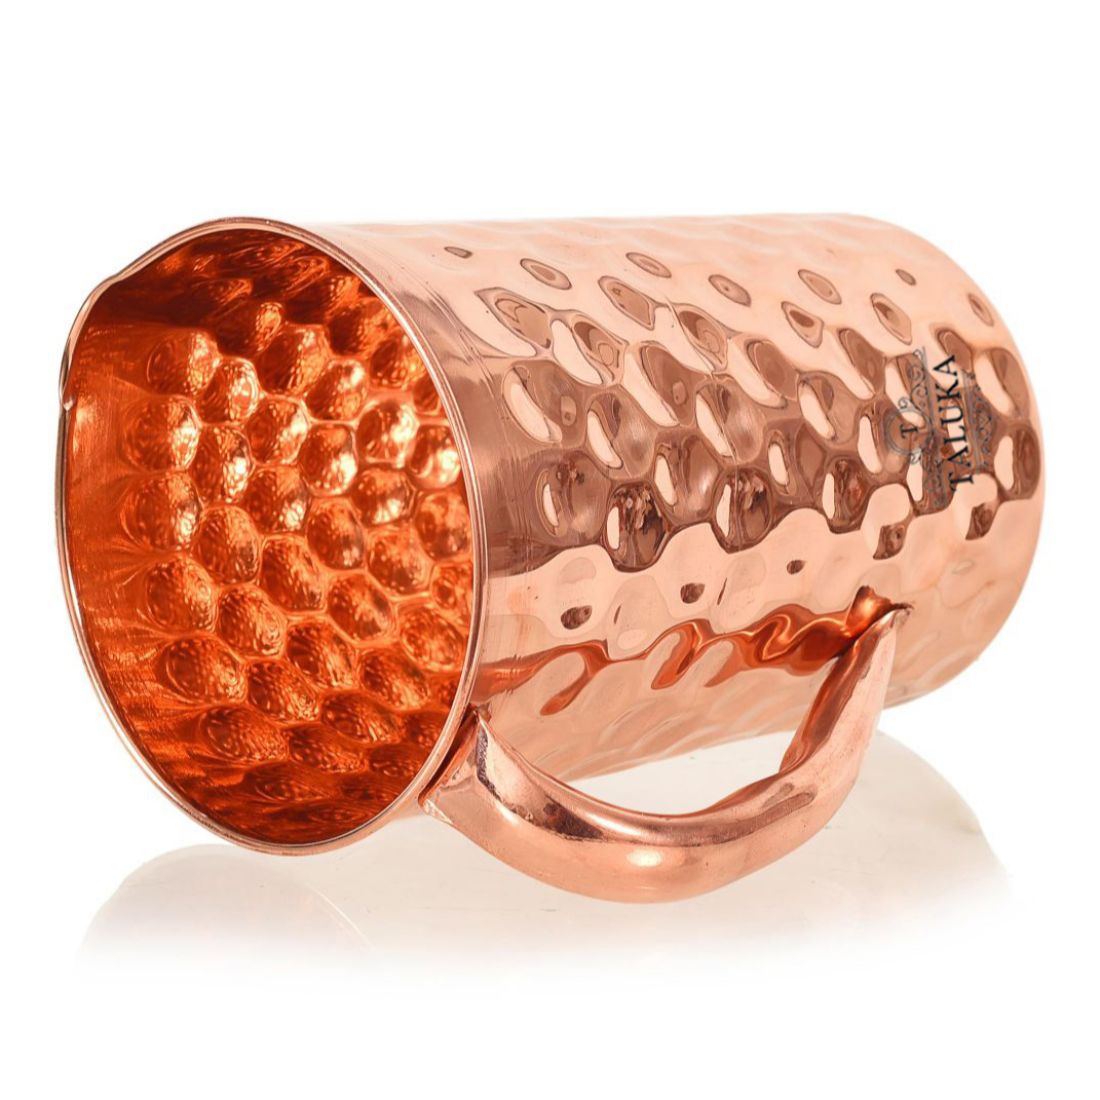 Copper Hammered Jug Pitcher 1500 ML Brass Knob Lid for Storage Drinking Purpose Diamond Design